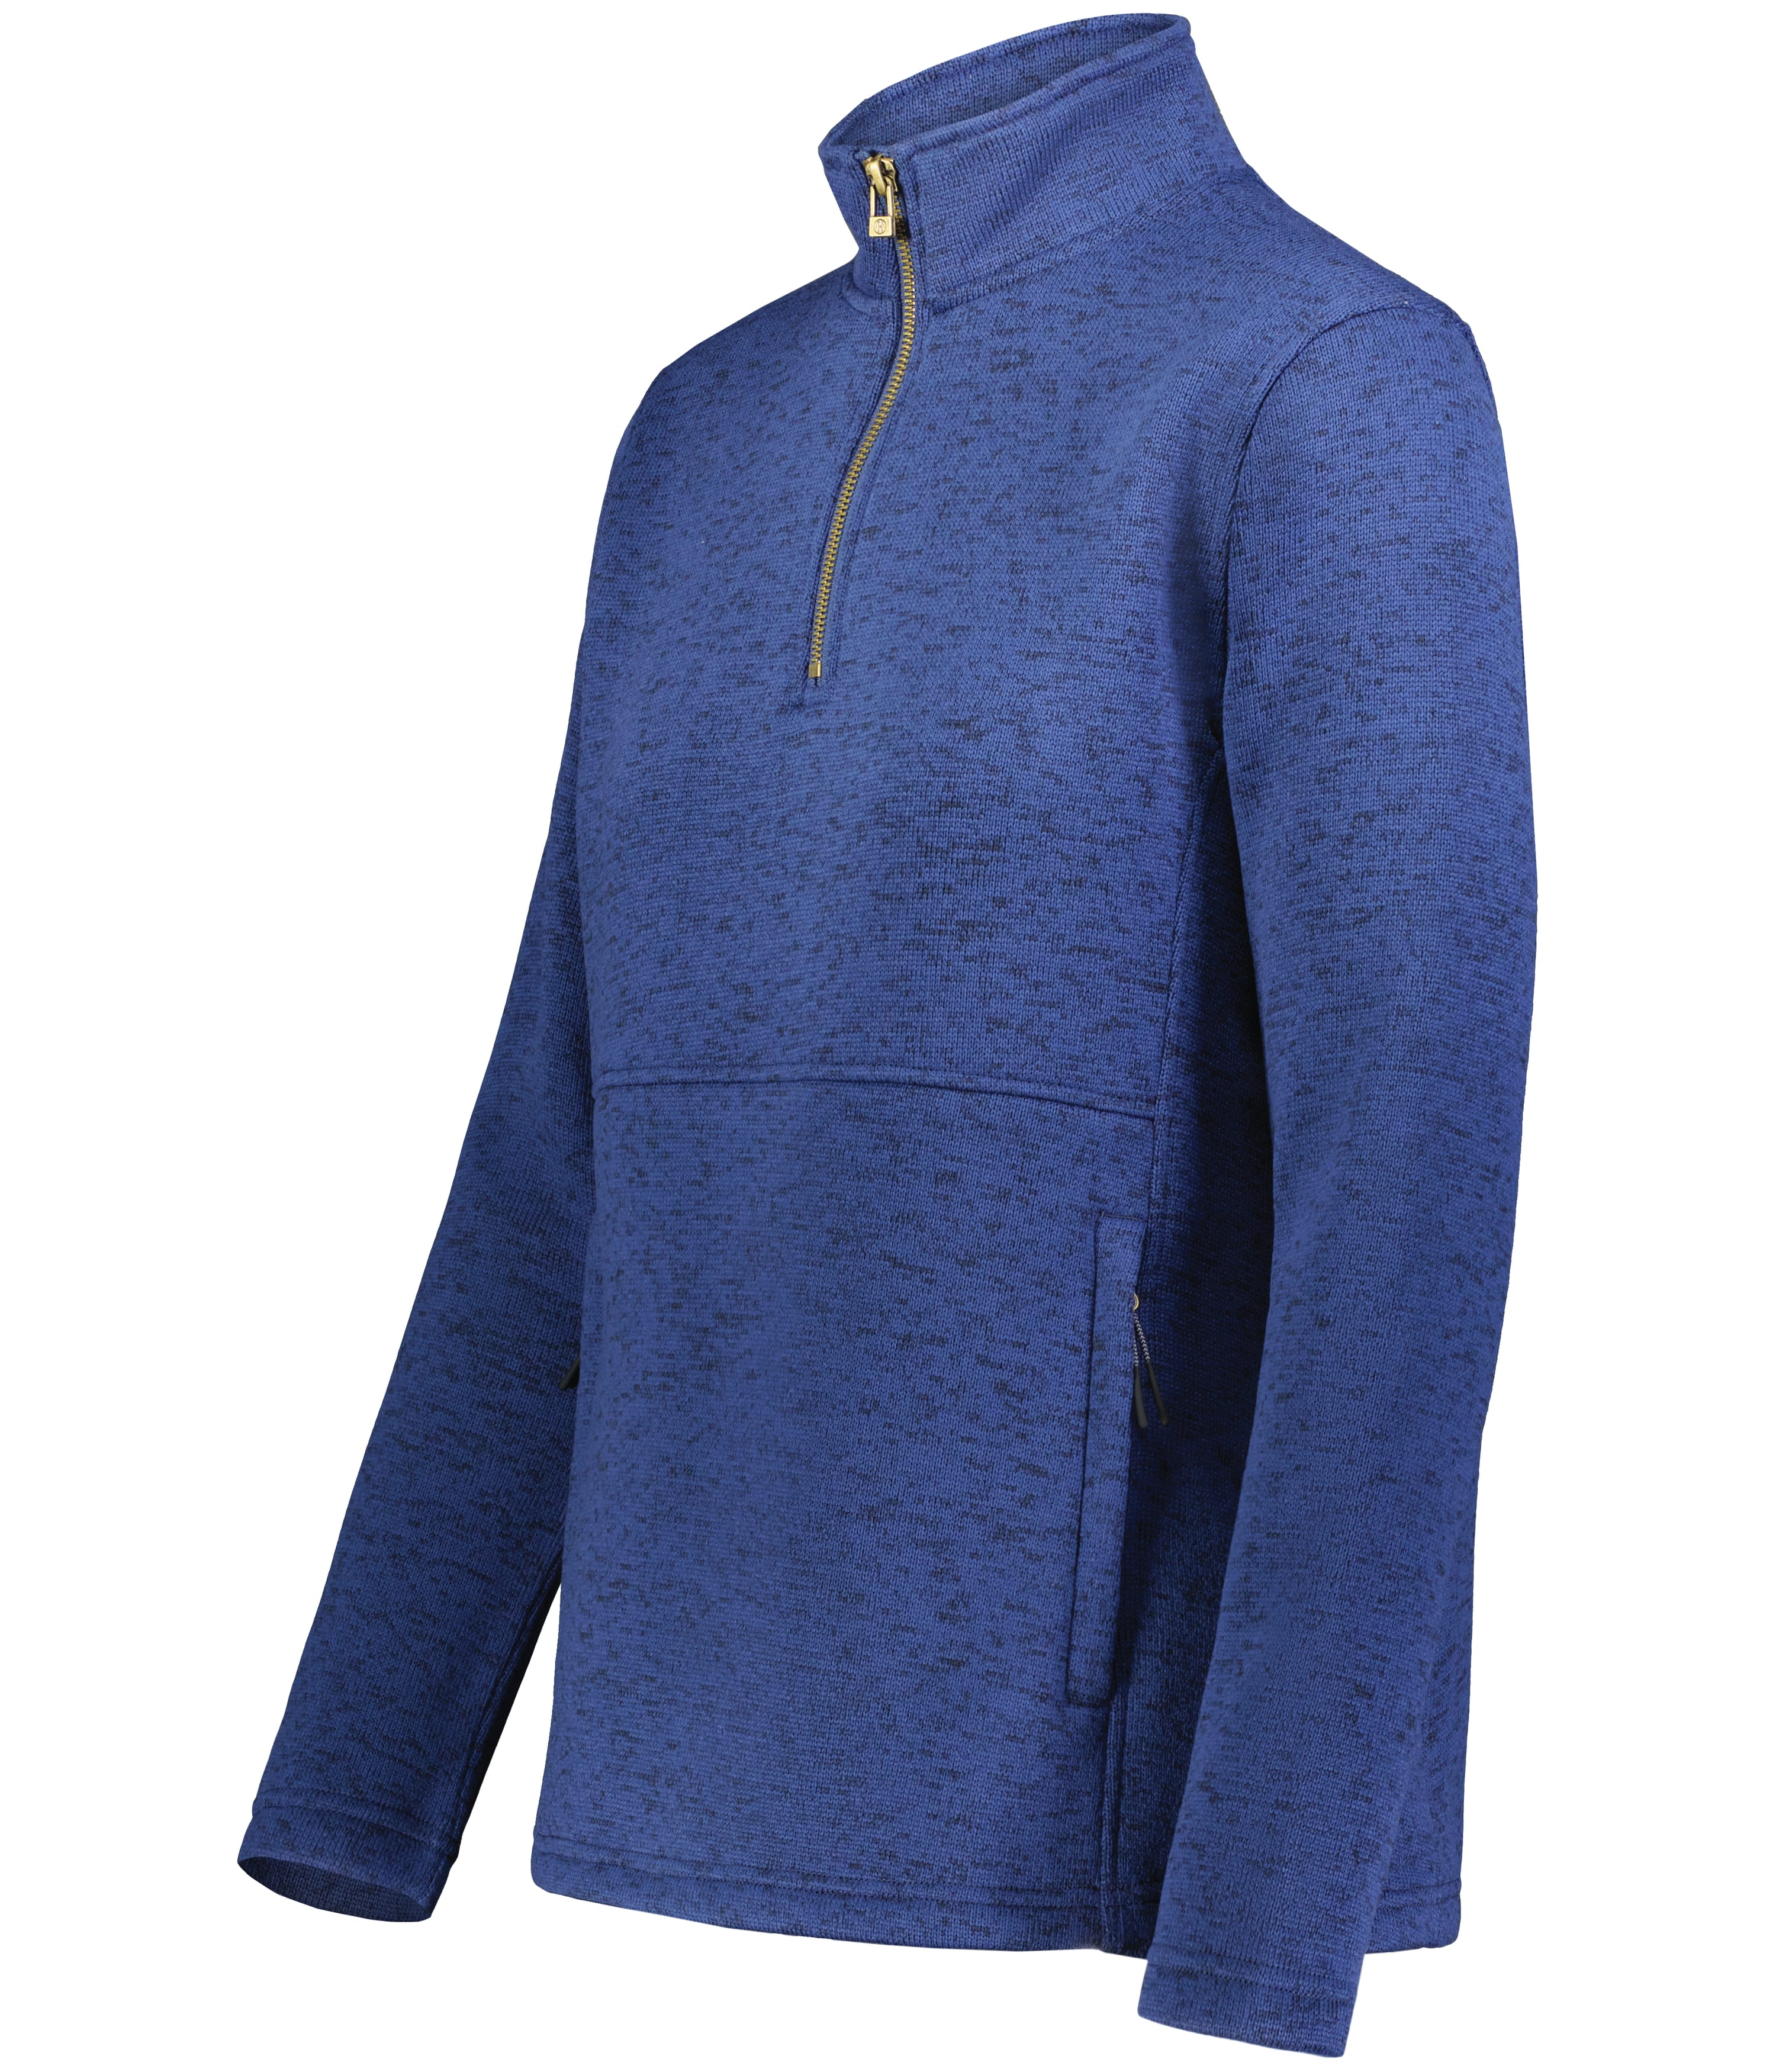 I4) 223740 Holloway Ladies Alpine Sweater Fleece 1/4 Zip Pullover - BLADECORE